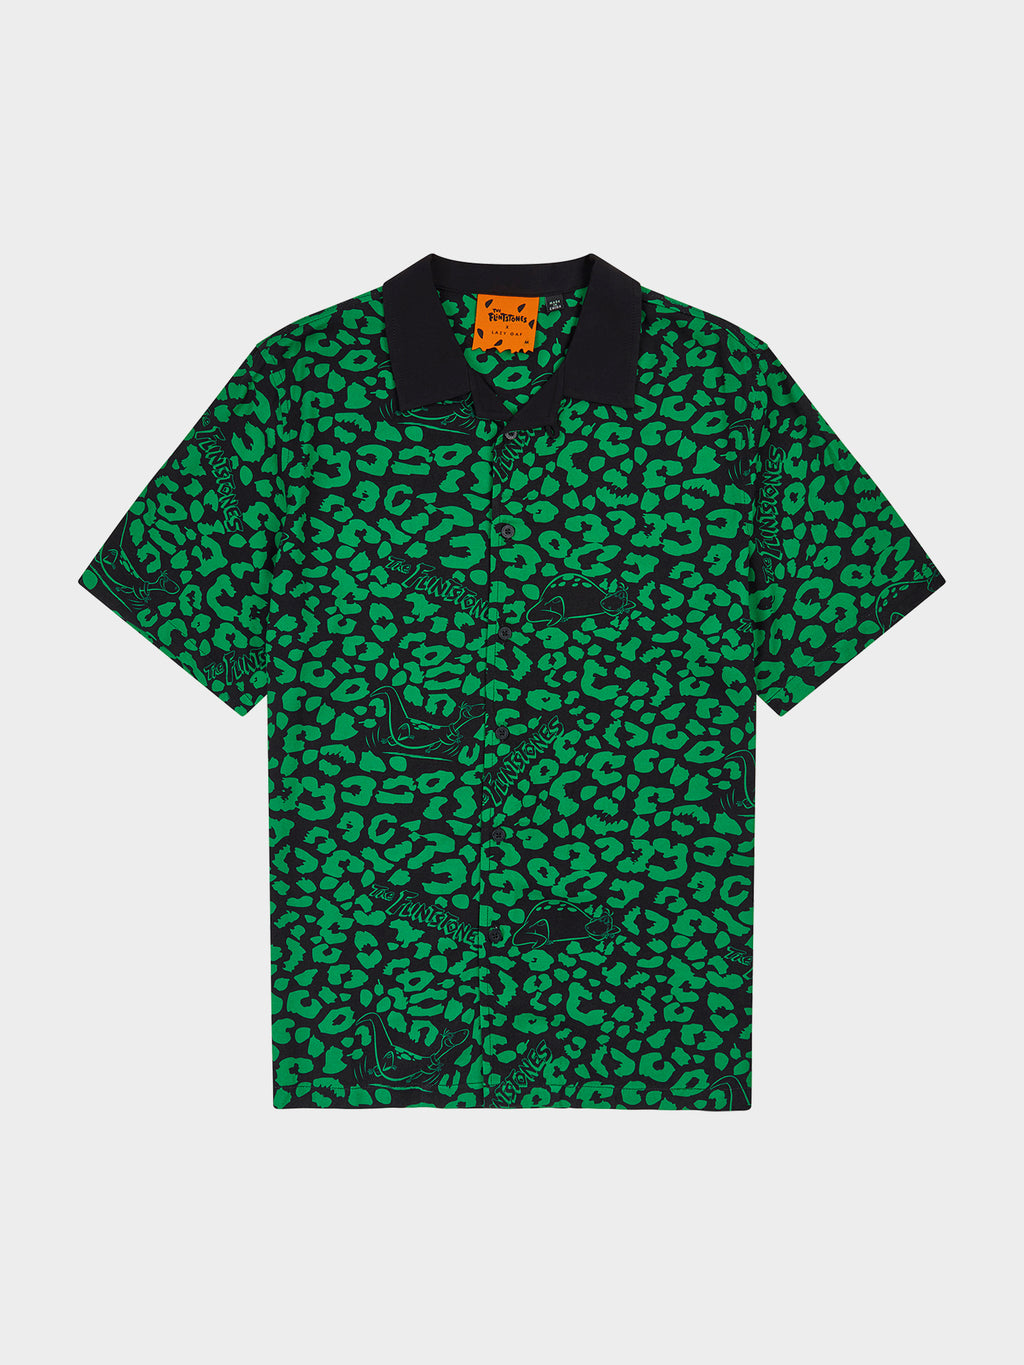 Lazy Oaf x The Flintstones Dino Leopard Bowling Shirt